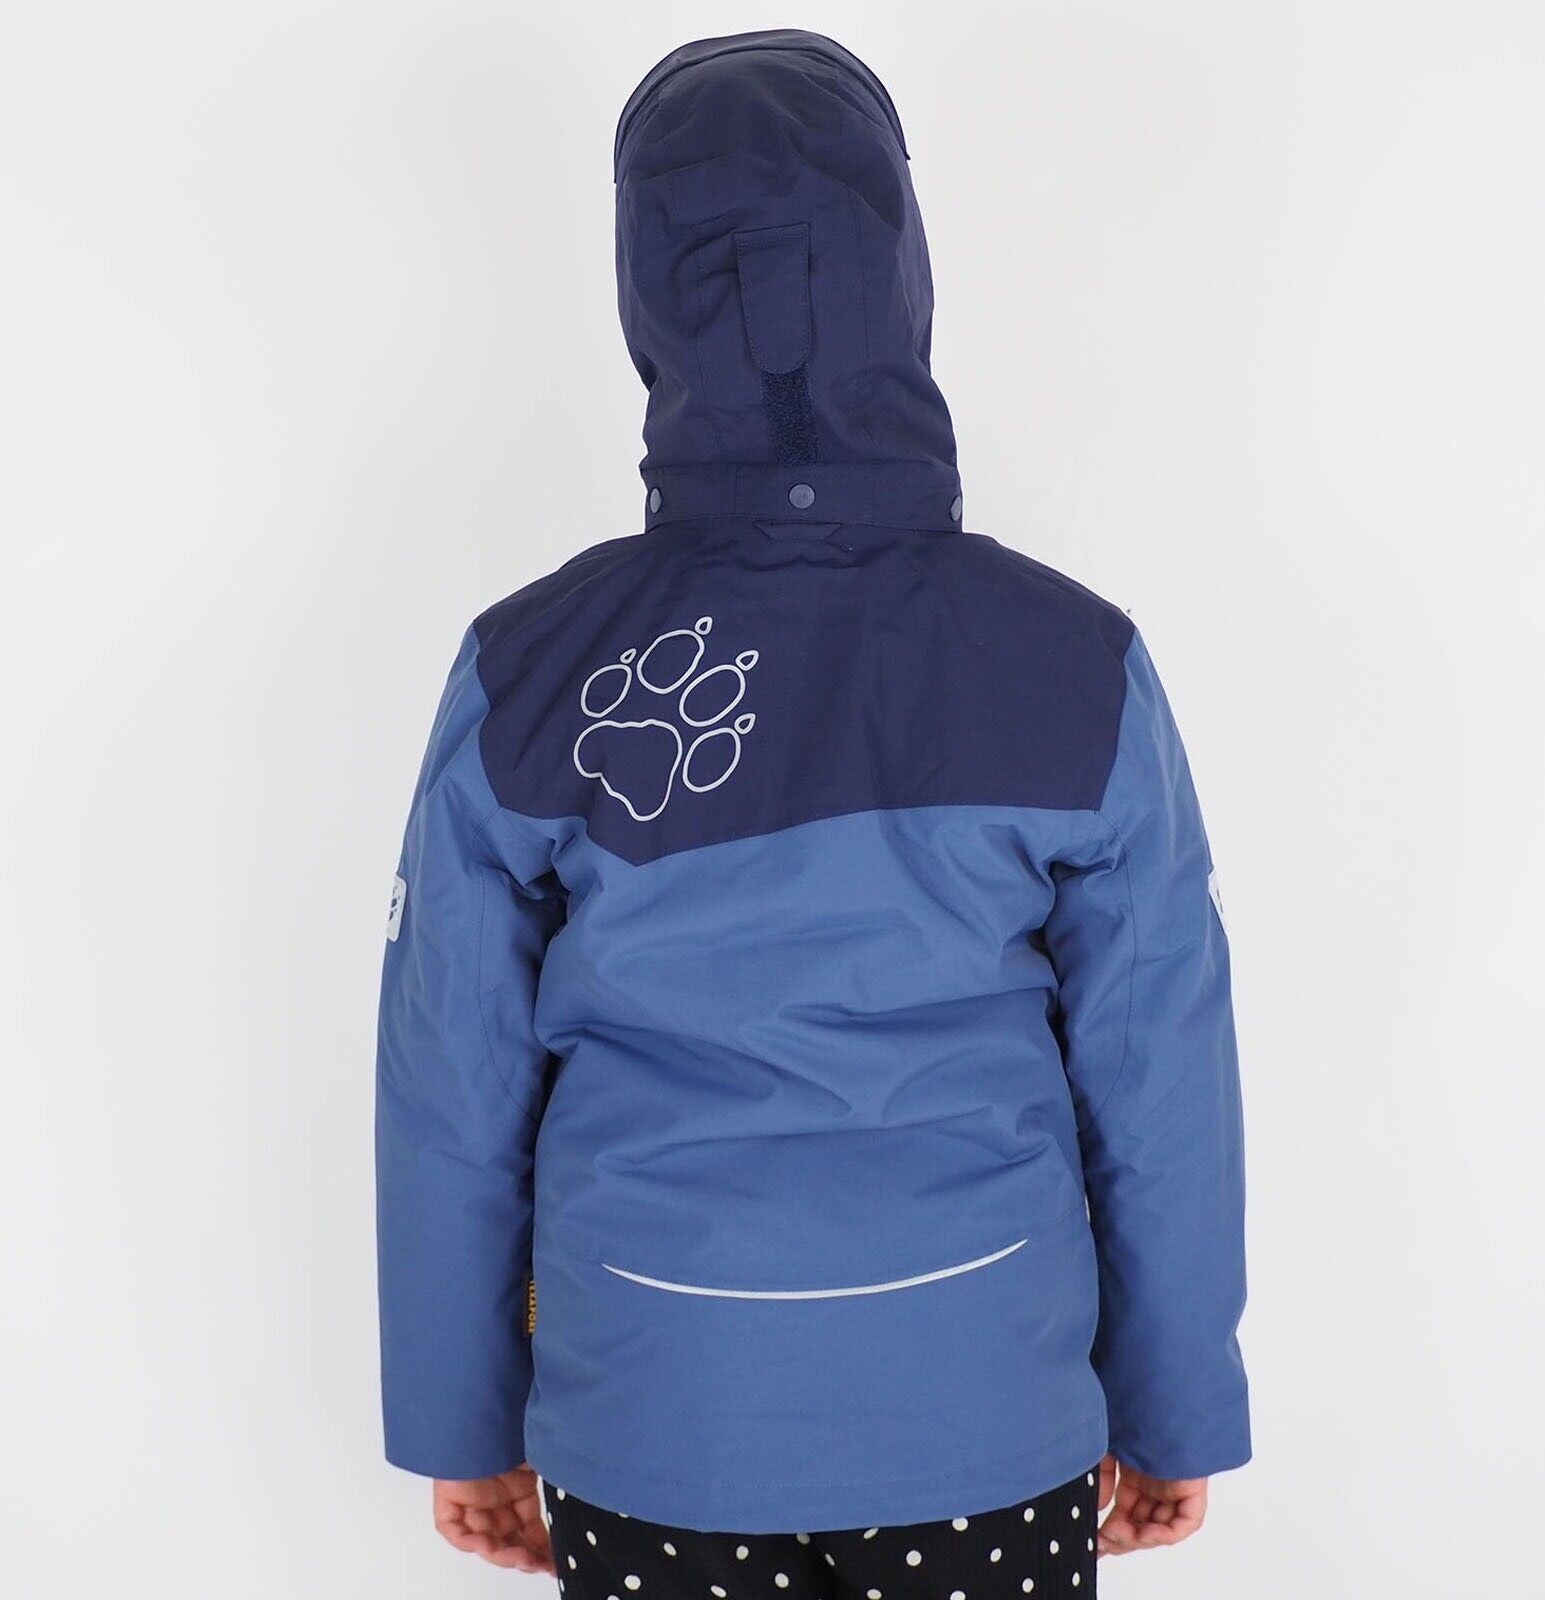 Girls Jack Wolfskin Snow Wizard 1605241 Blue Indigo Waterproof Jacket - London Top Style